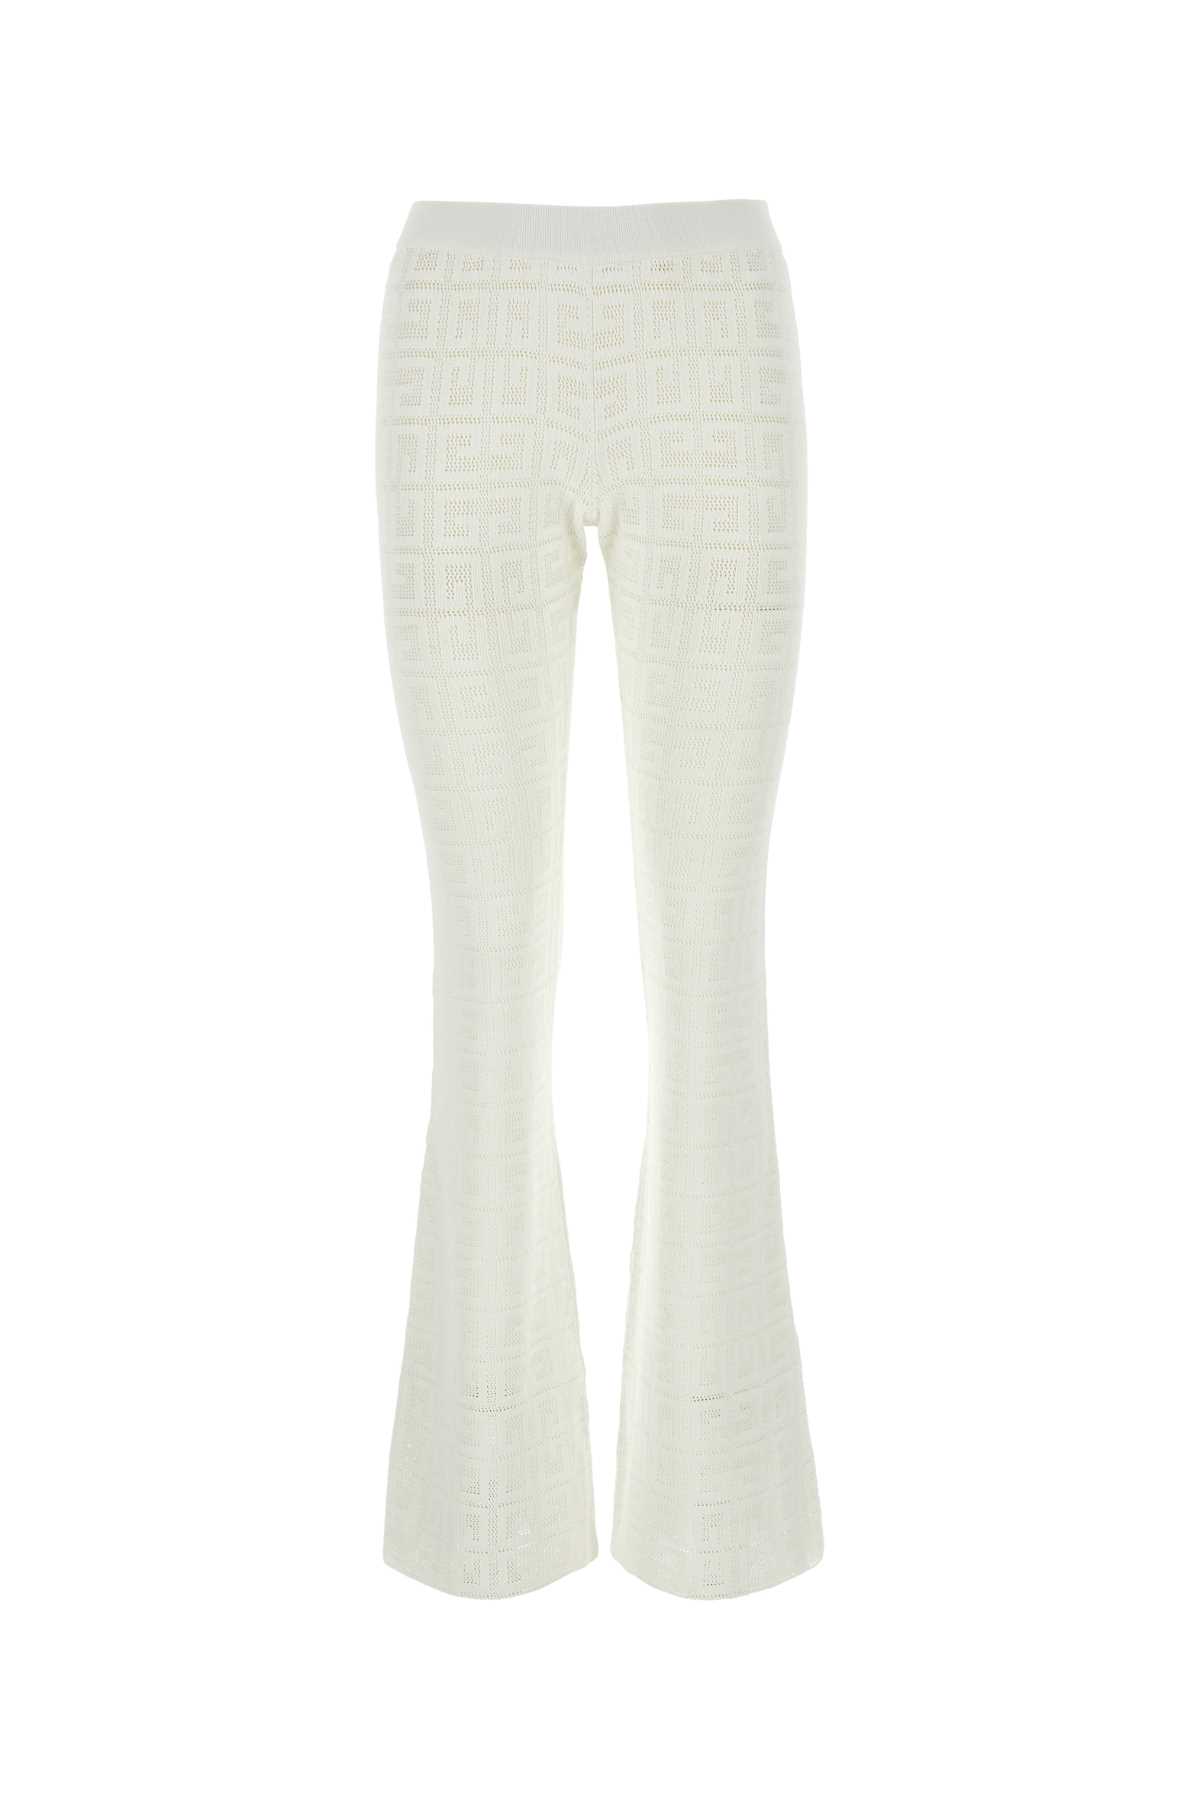 Givenchy White Jacquard Pant